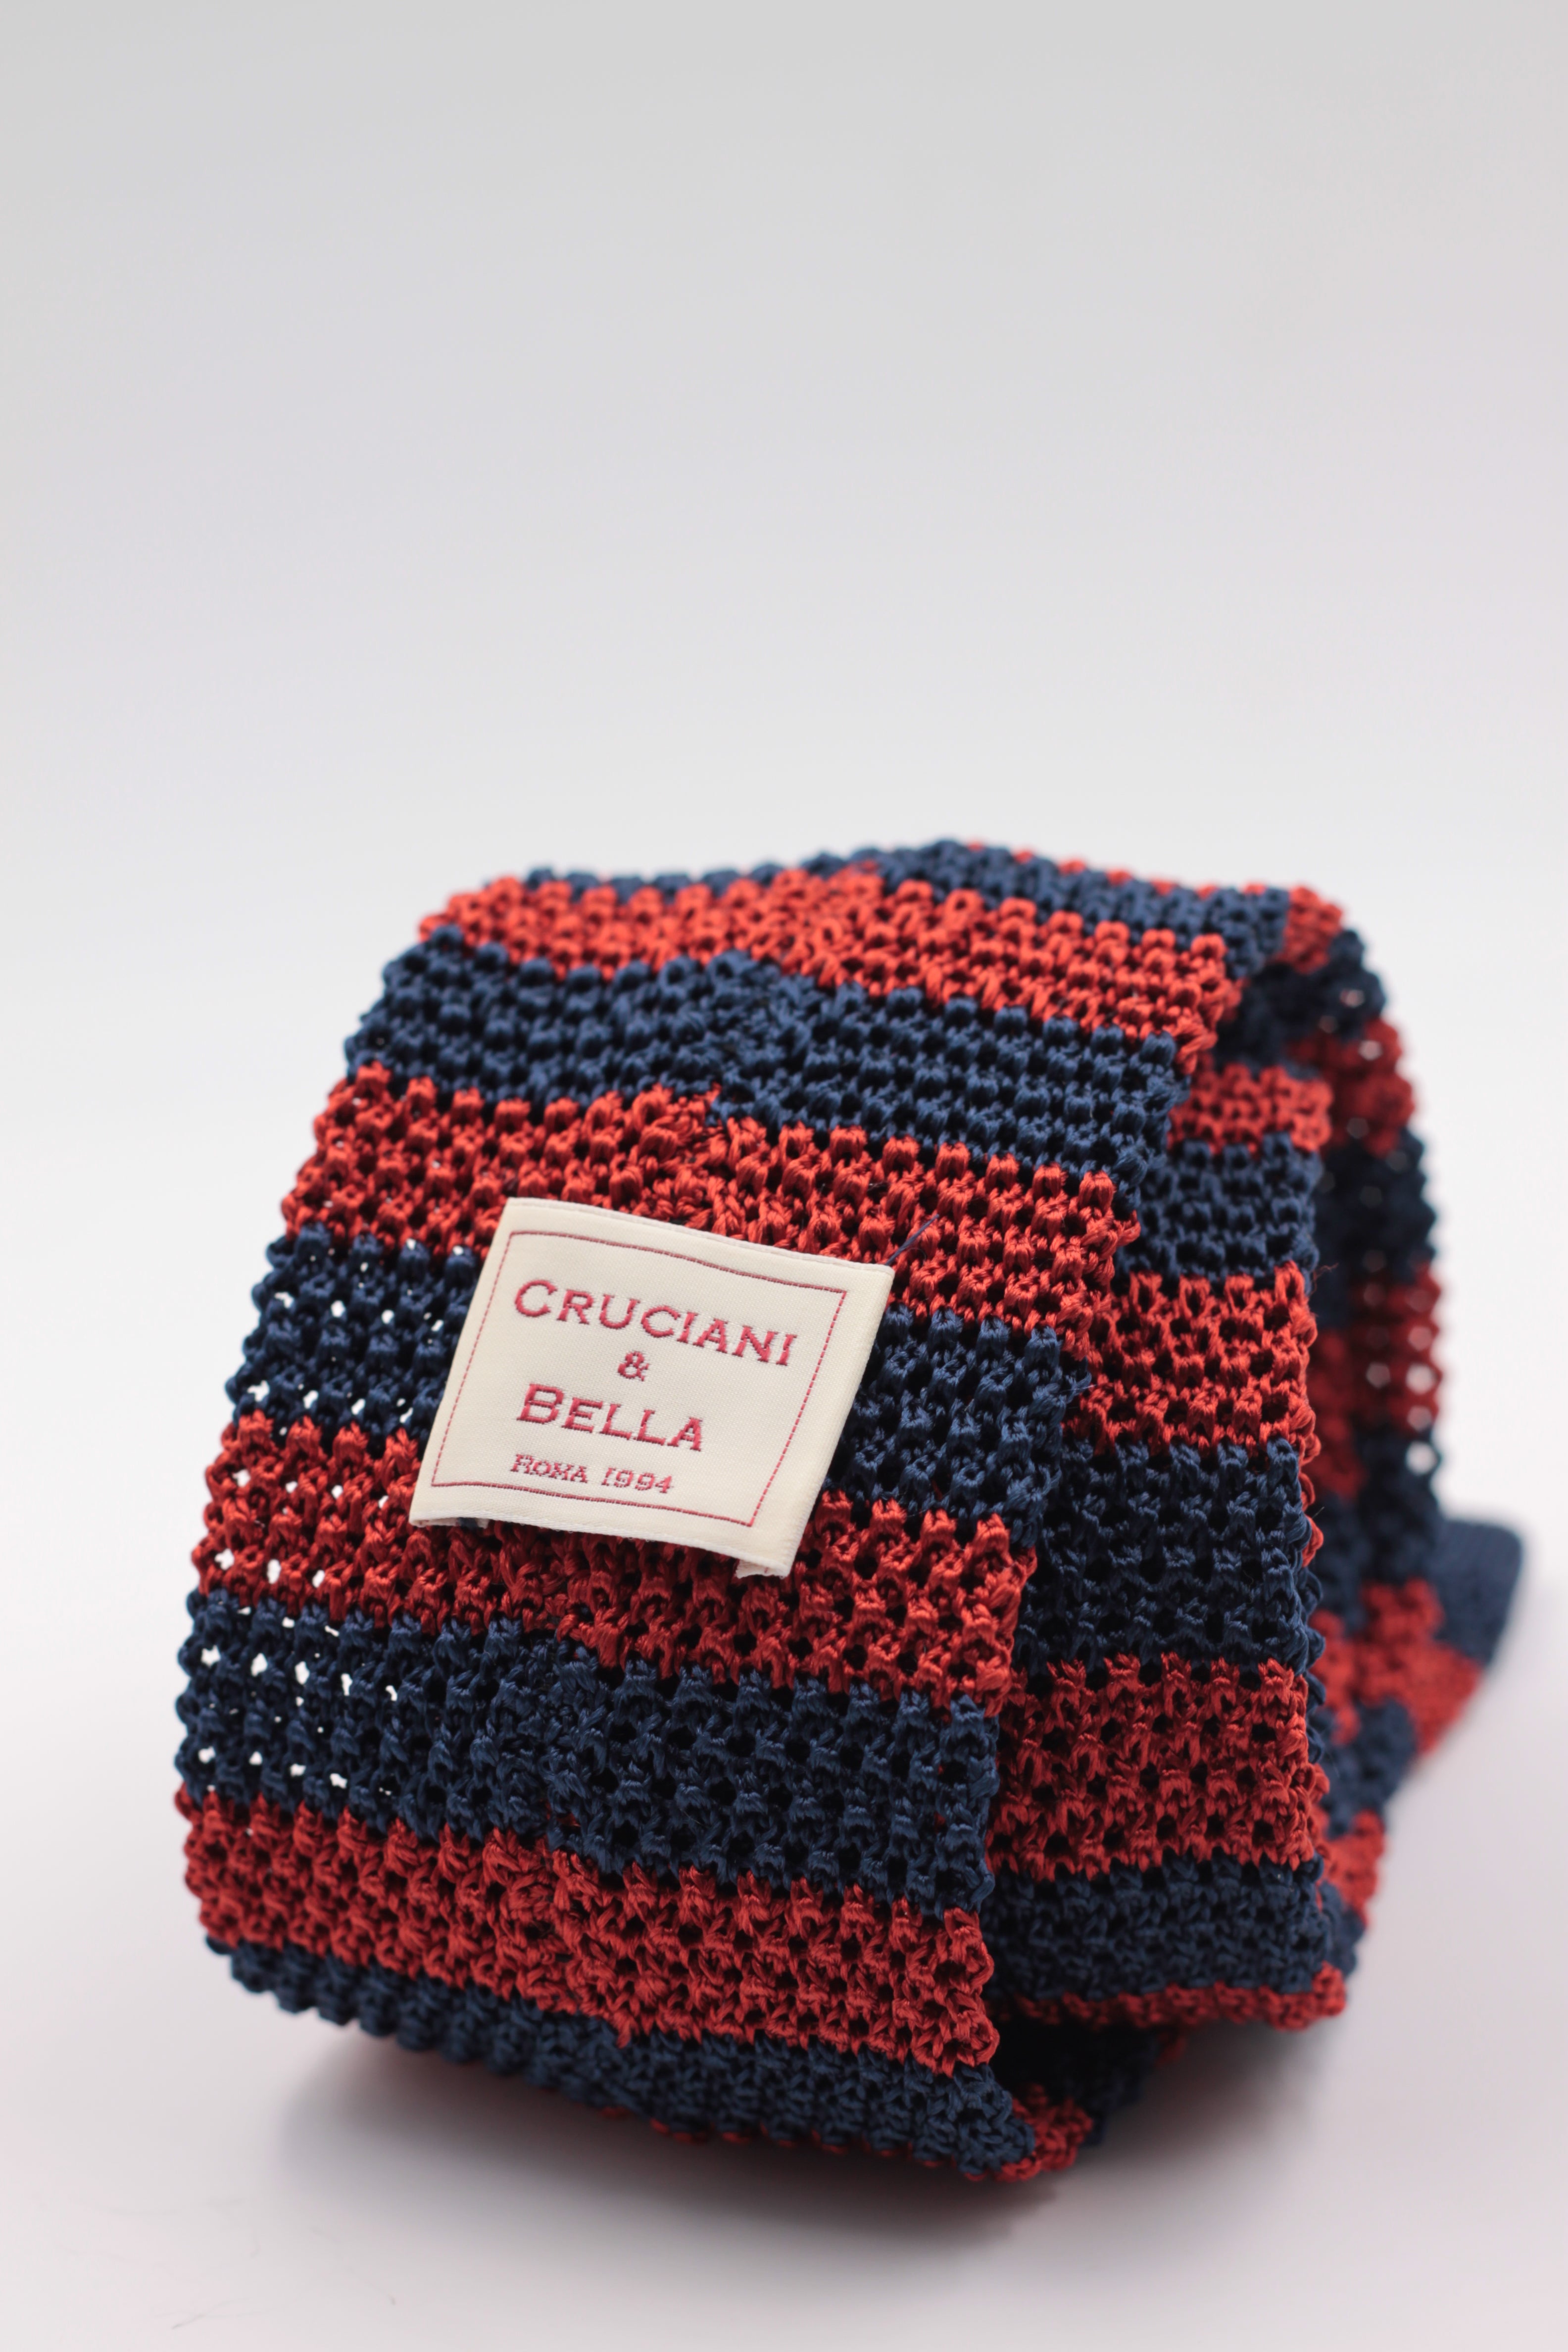 Cruciani & Bella 100% Knitted Silk Blue and Dark Orange stripe tie Handmade in Italy 6 cm x 147 cm